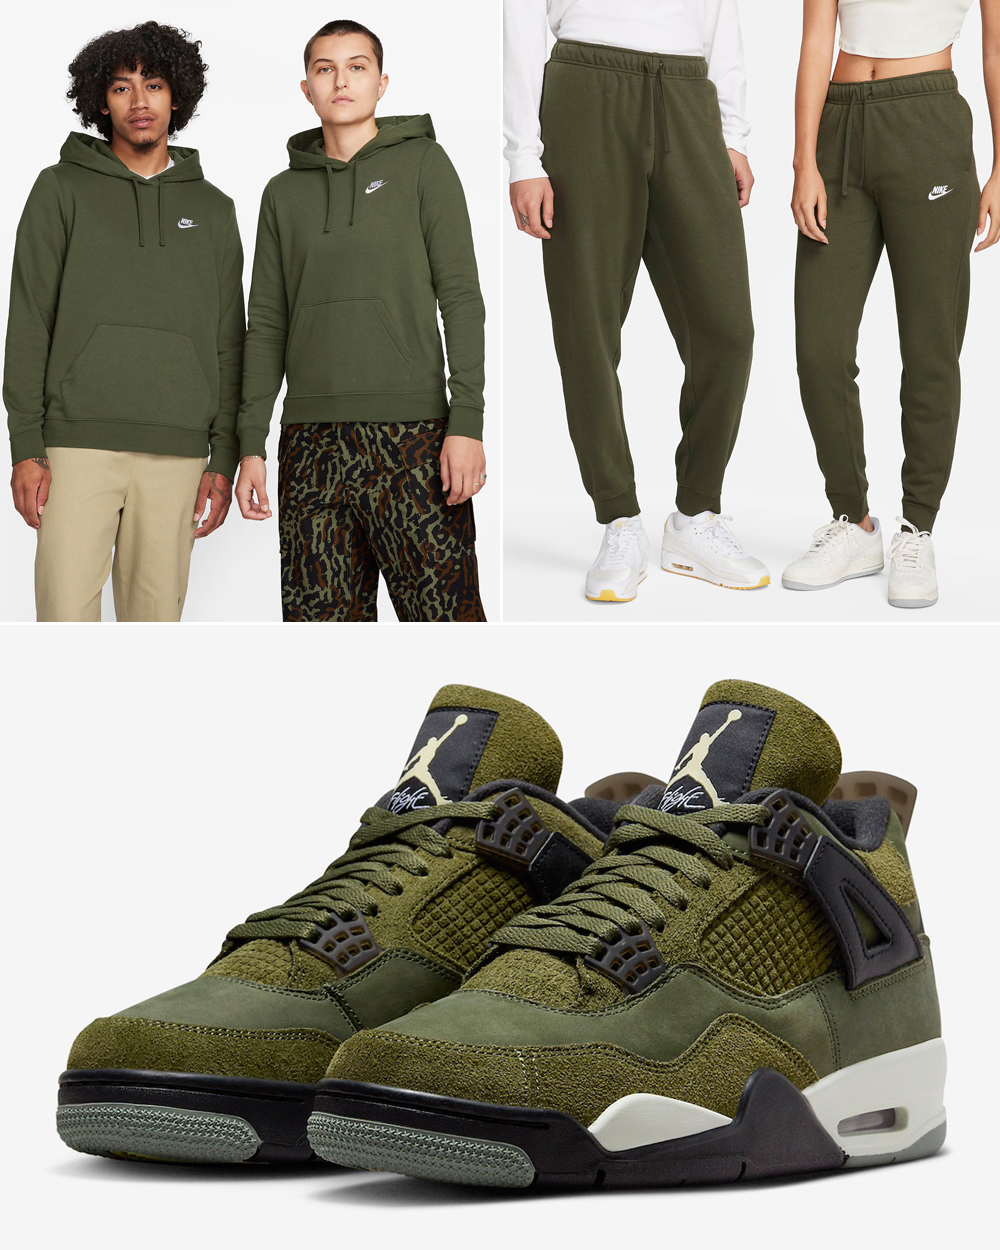 Air Jordan 4 Craft Olive Nike Fleece Clothing